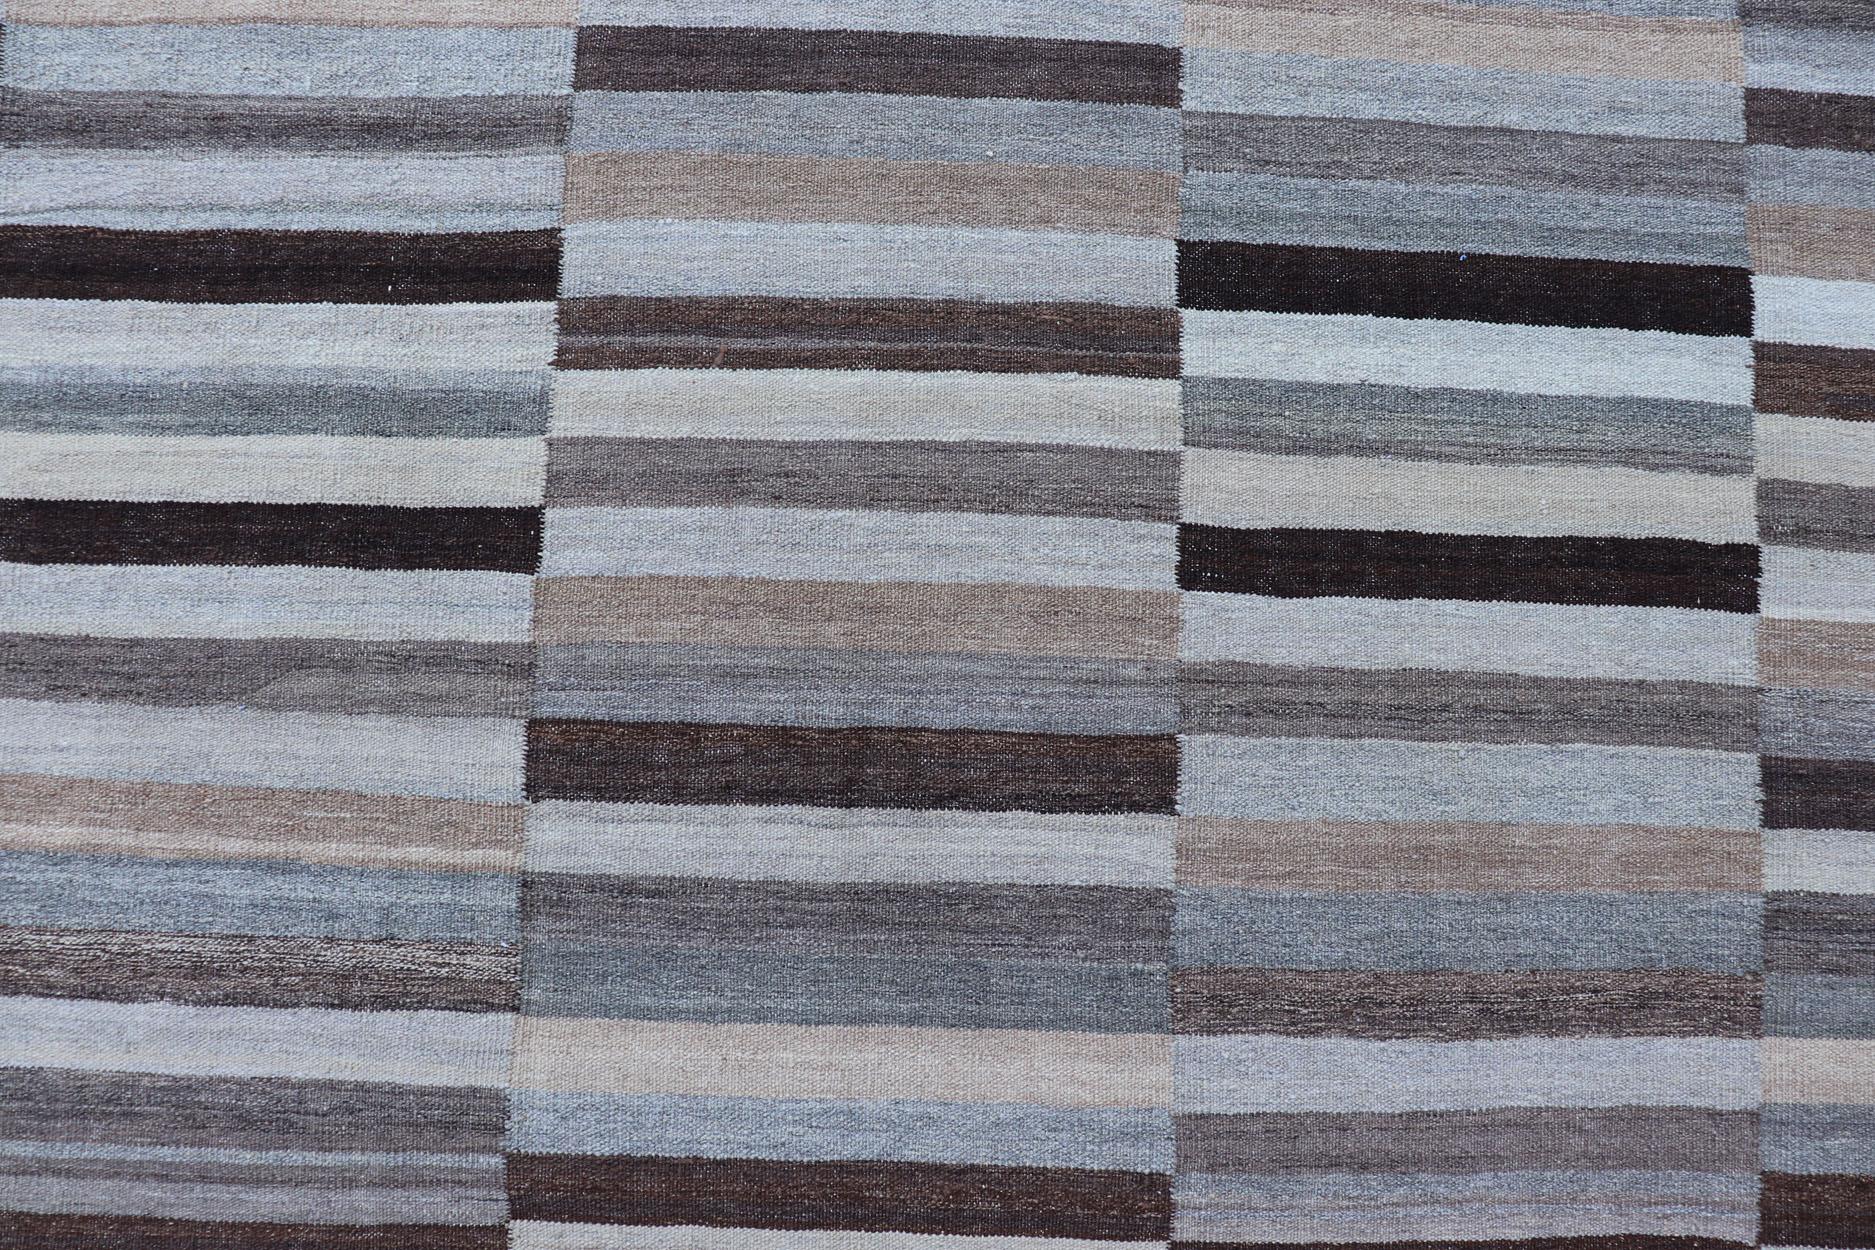 Modern Flat-Weave Kilim Rug in Multi-Panel Striped Design in Earthy Tones For Sale 5